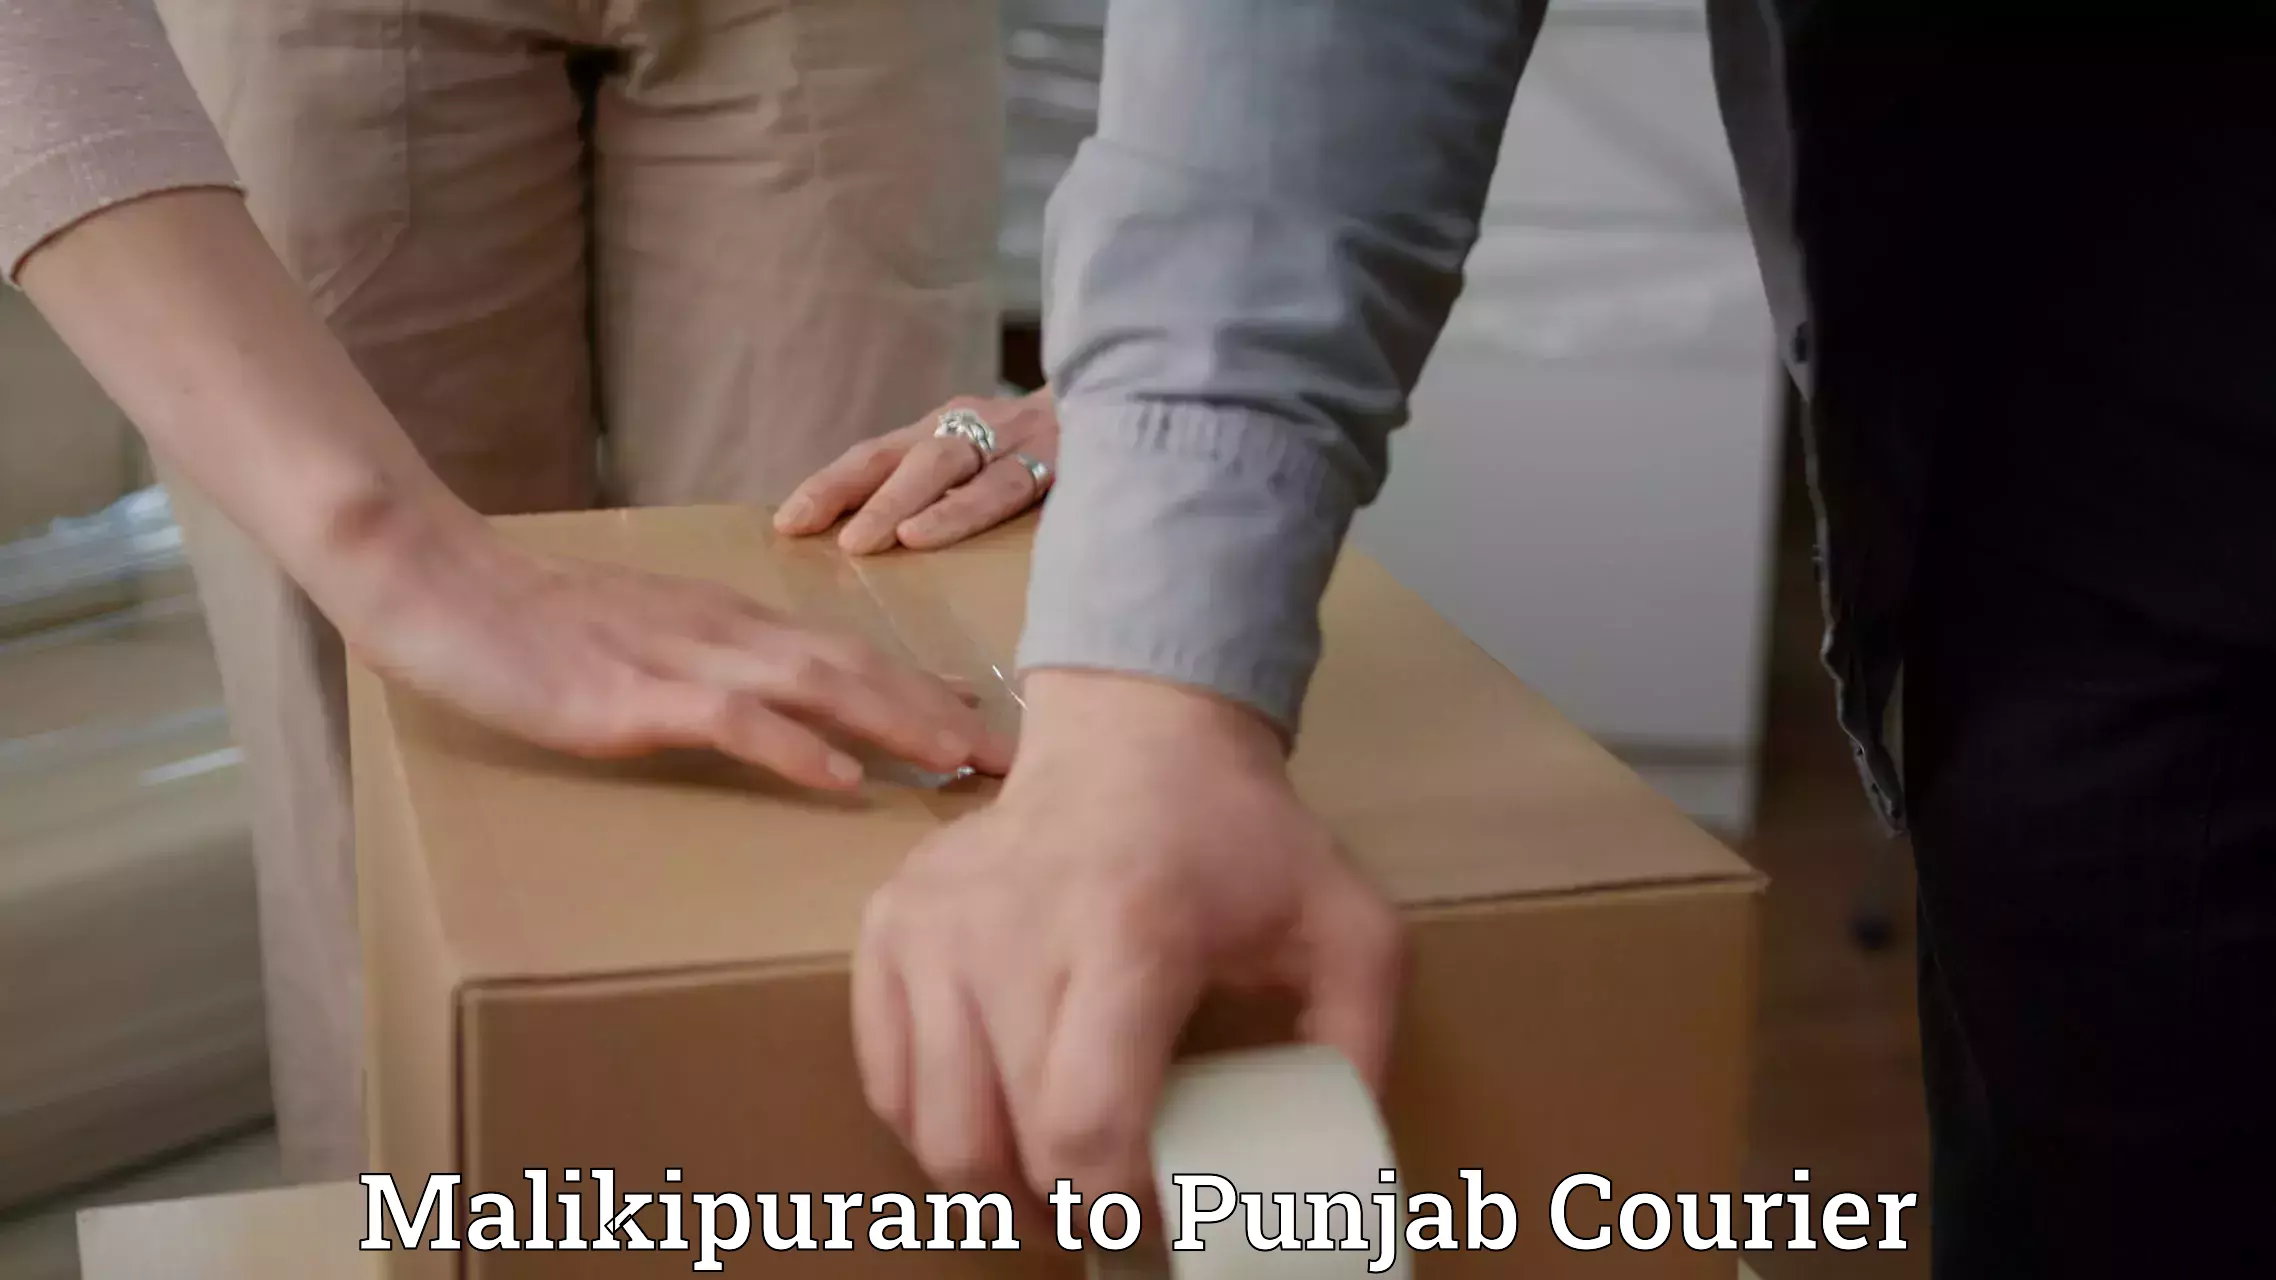 Parcel handling and care Malikipuram to Firozpur